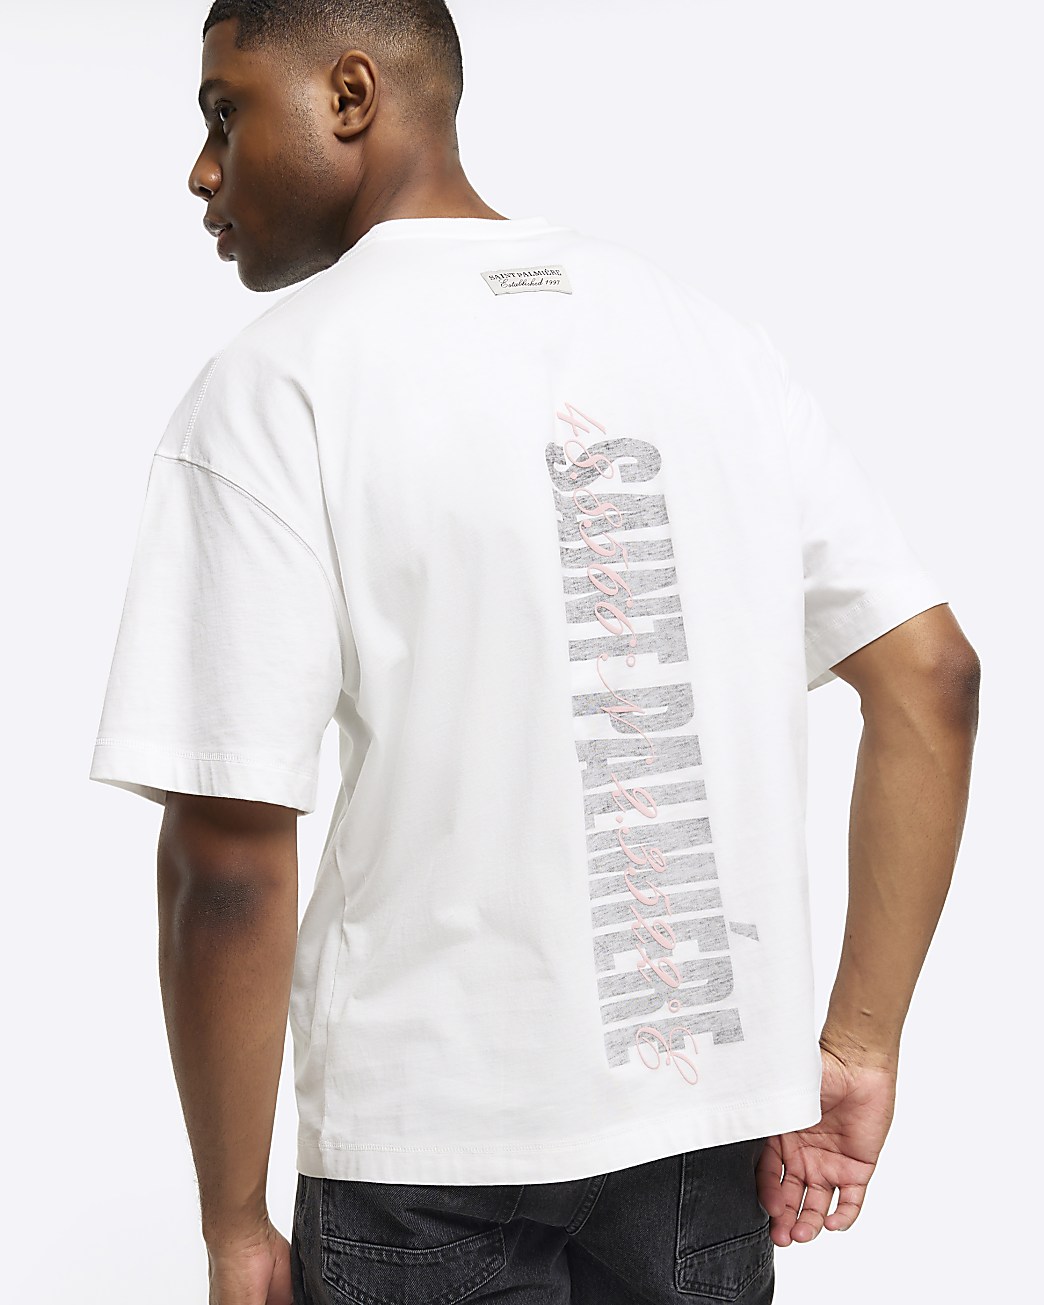 NEW Clementine Apparel Men's T-Shirt Short Sleeve Crew Neck White  Color.Size M